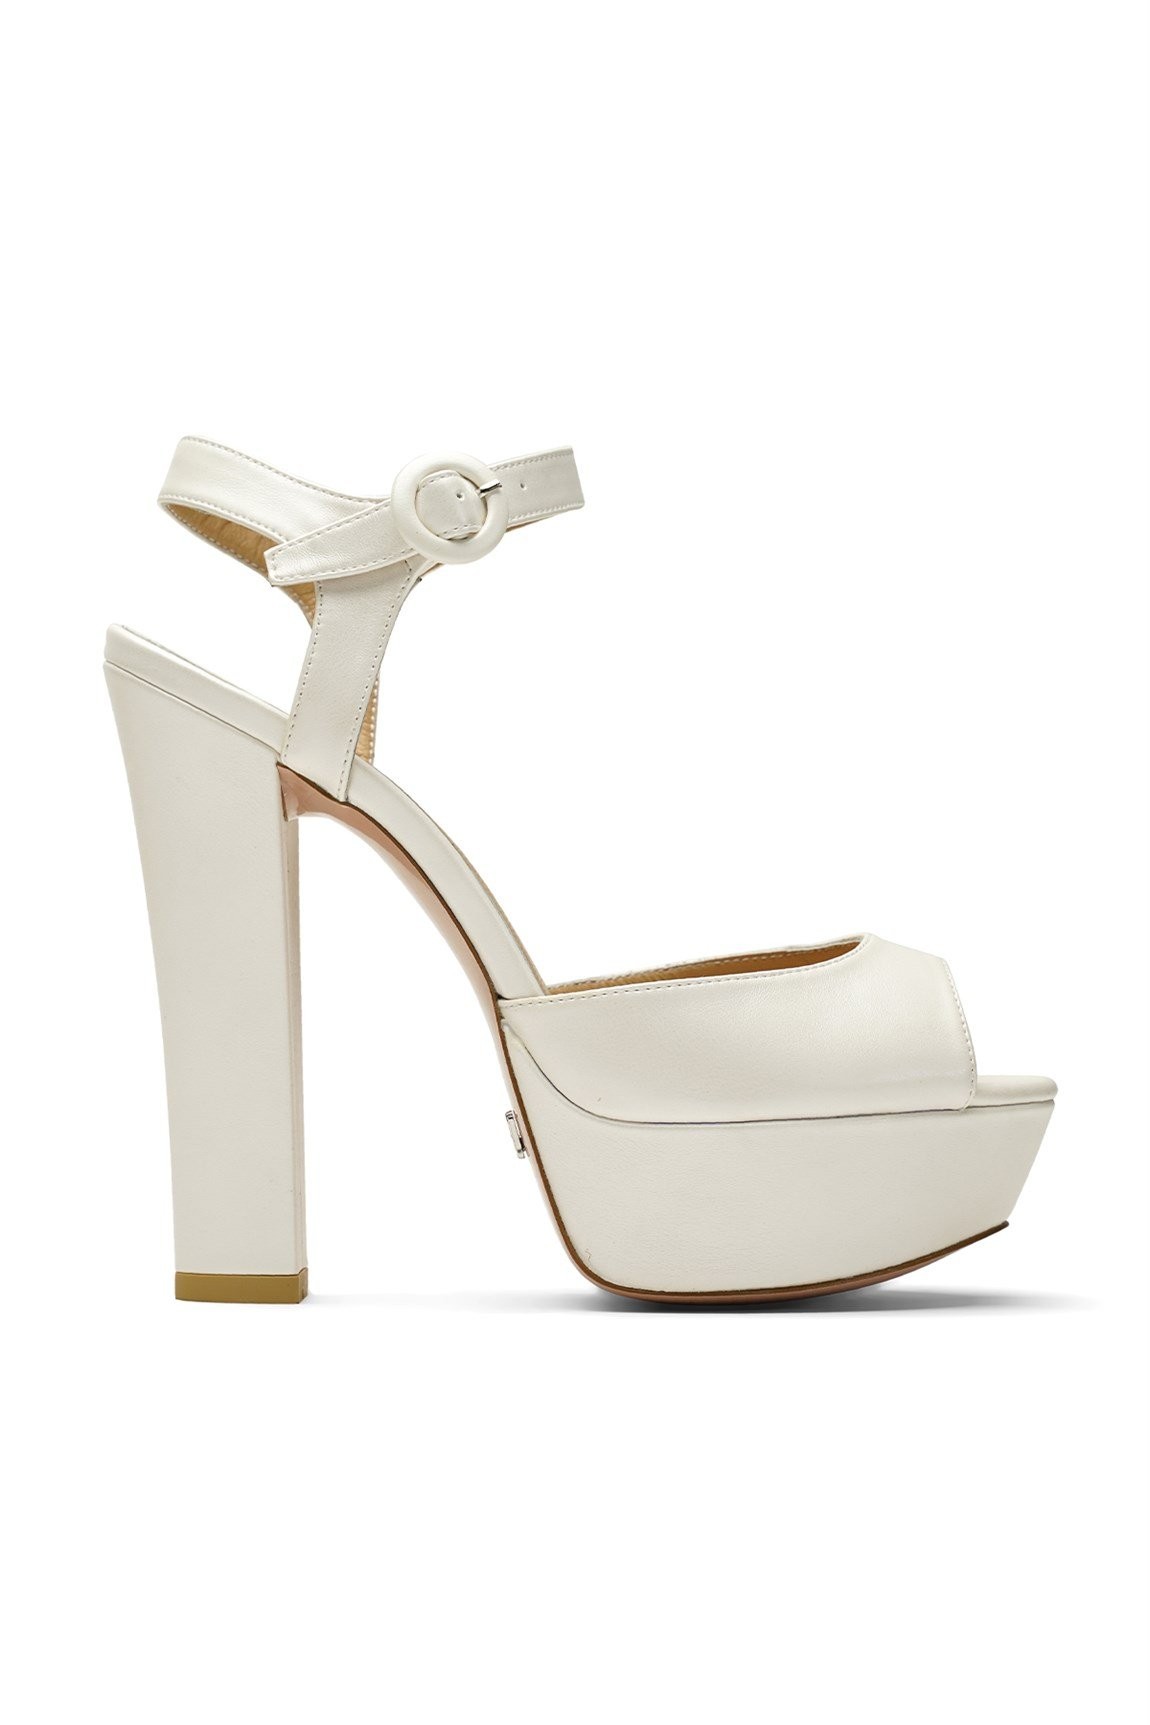 Jabotter Nifty Pearlescent White Platform Heeled Bridal Shoes